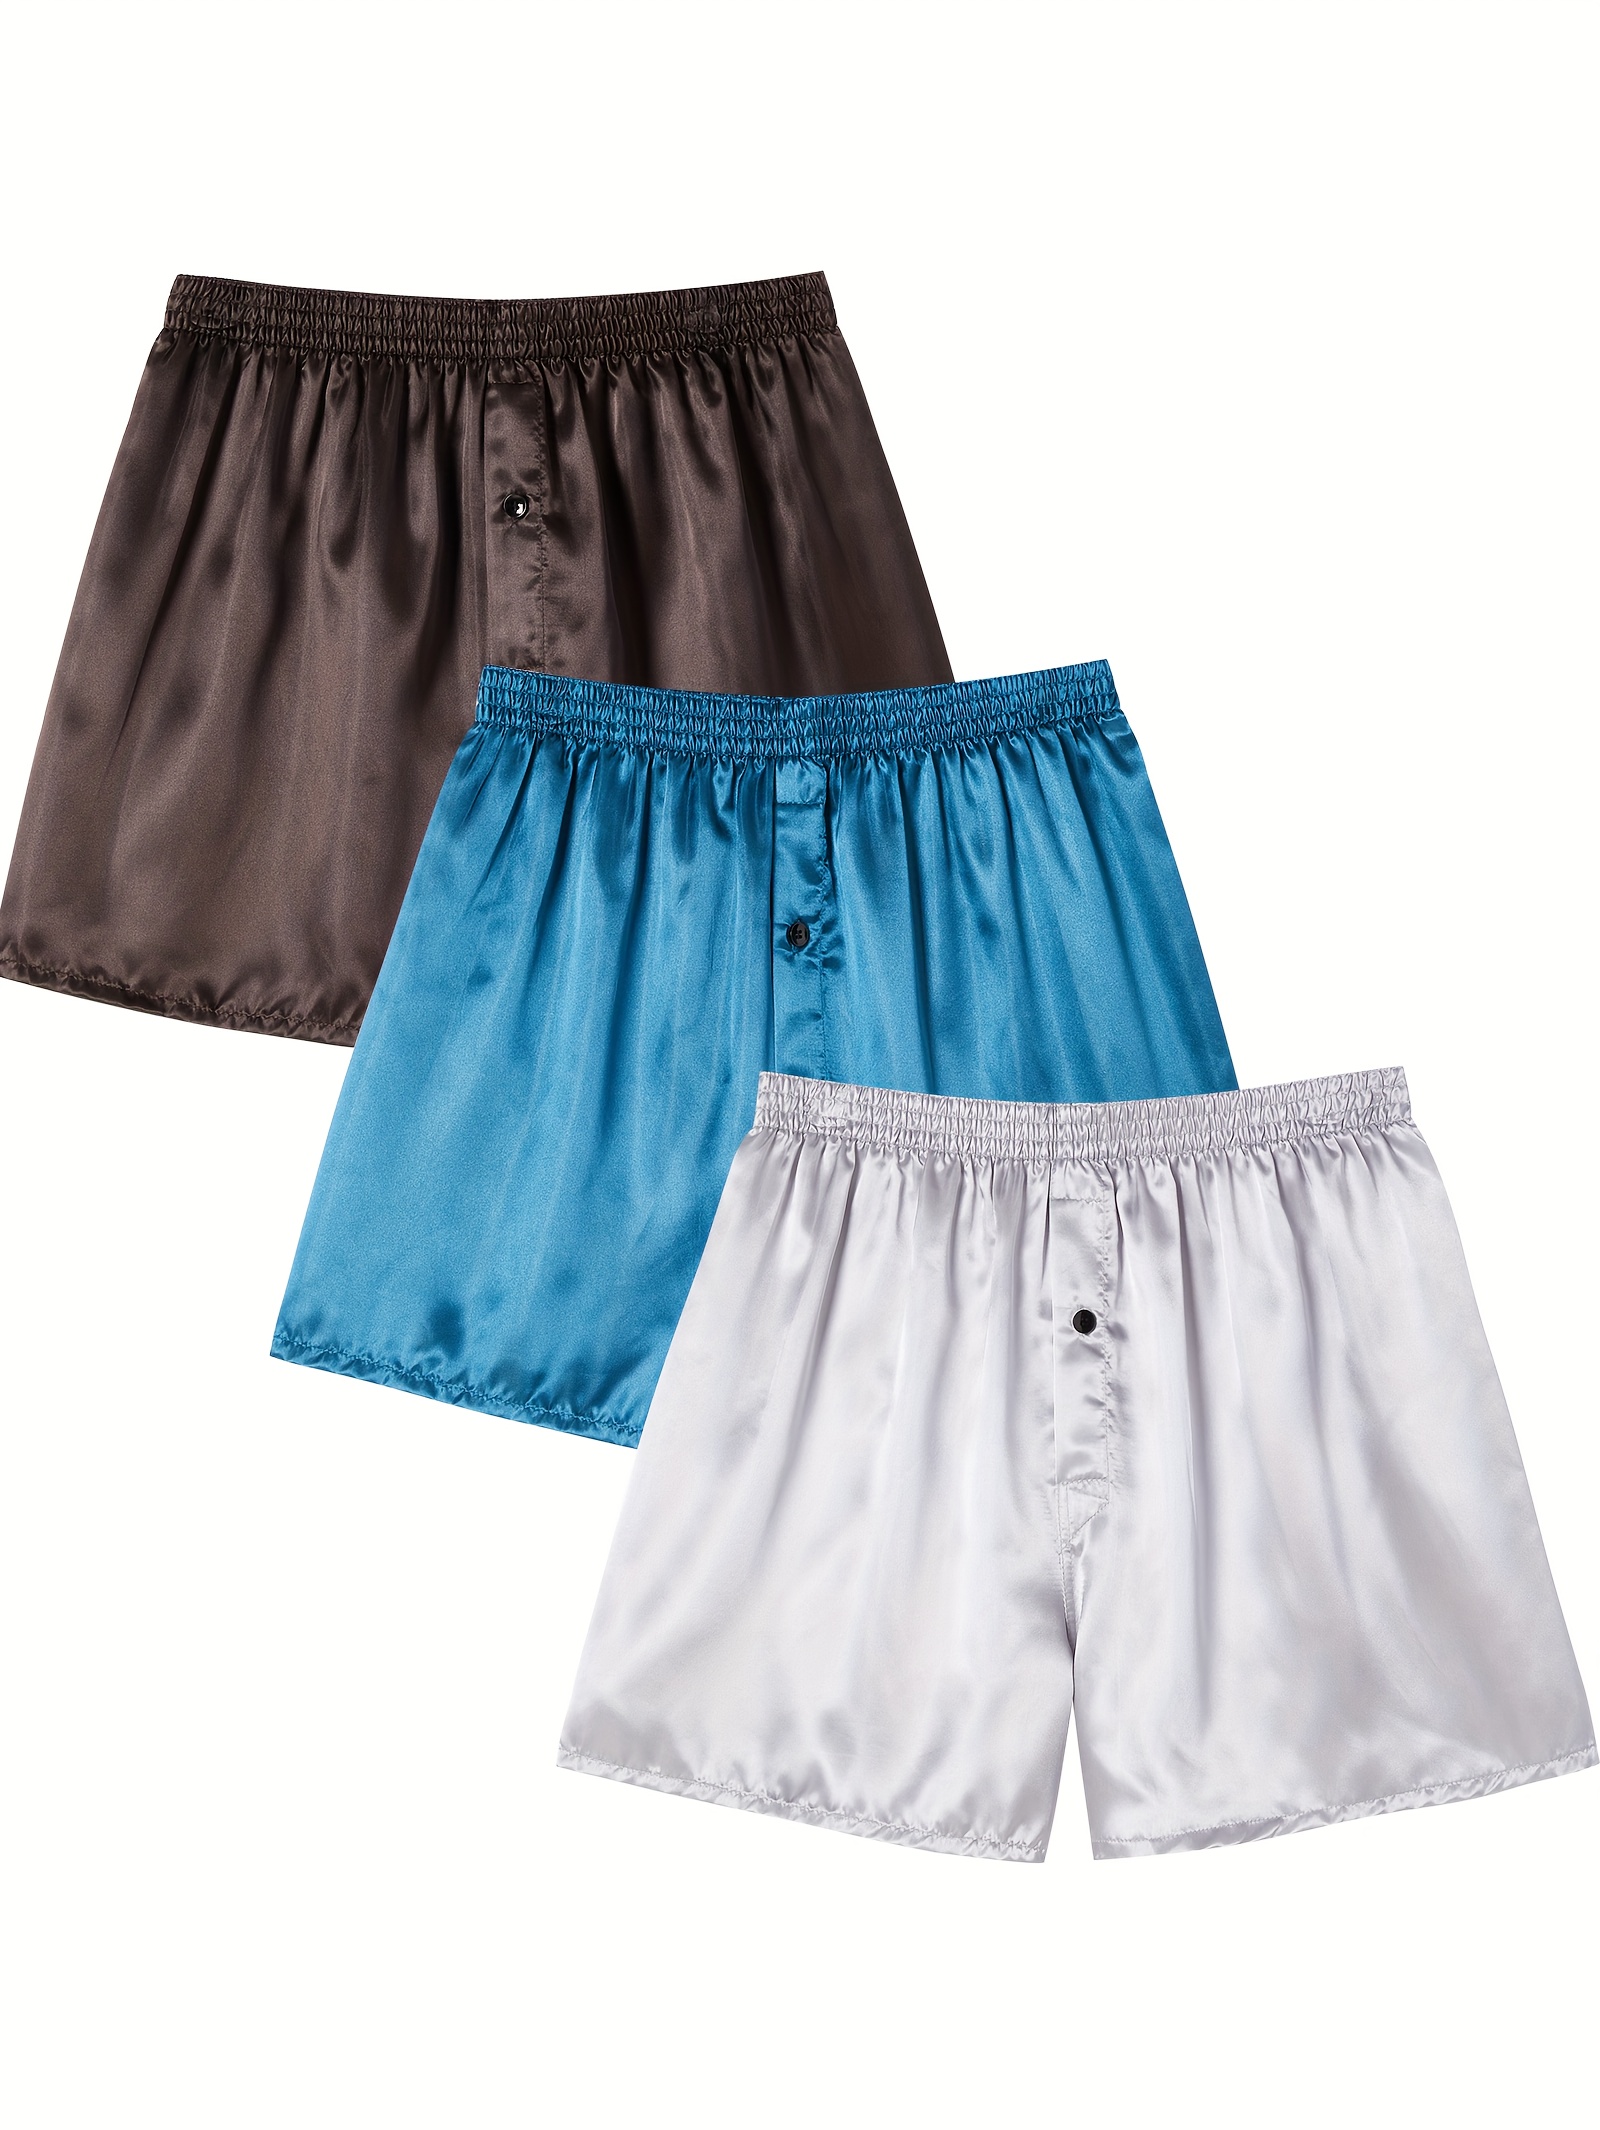 Men's Silk Sleepwear Boxer Shorts - Dove Grey - The Silk Lady